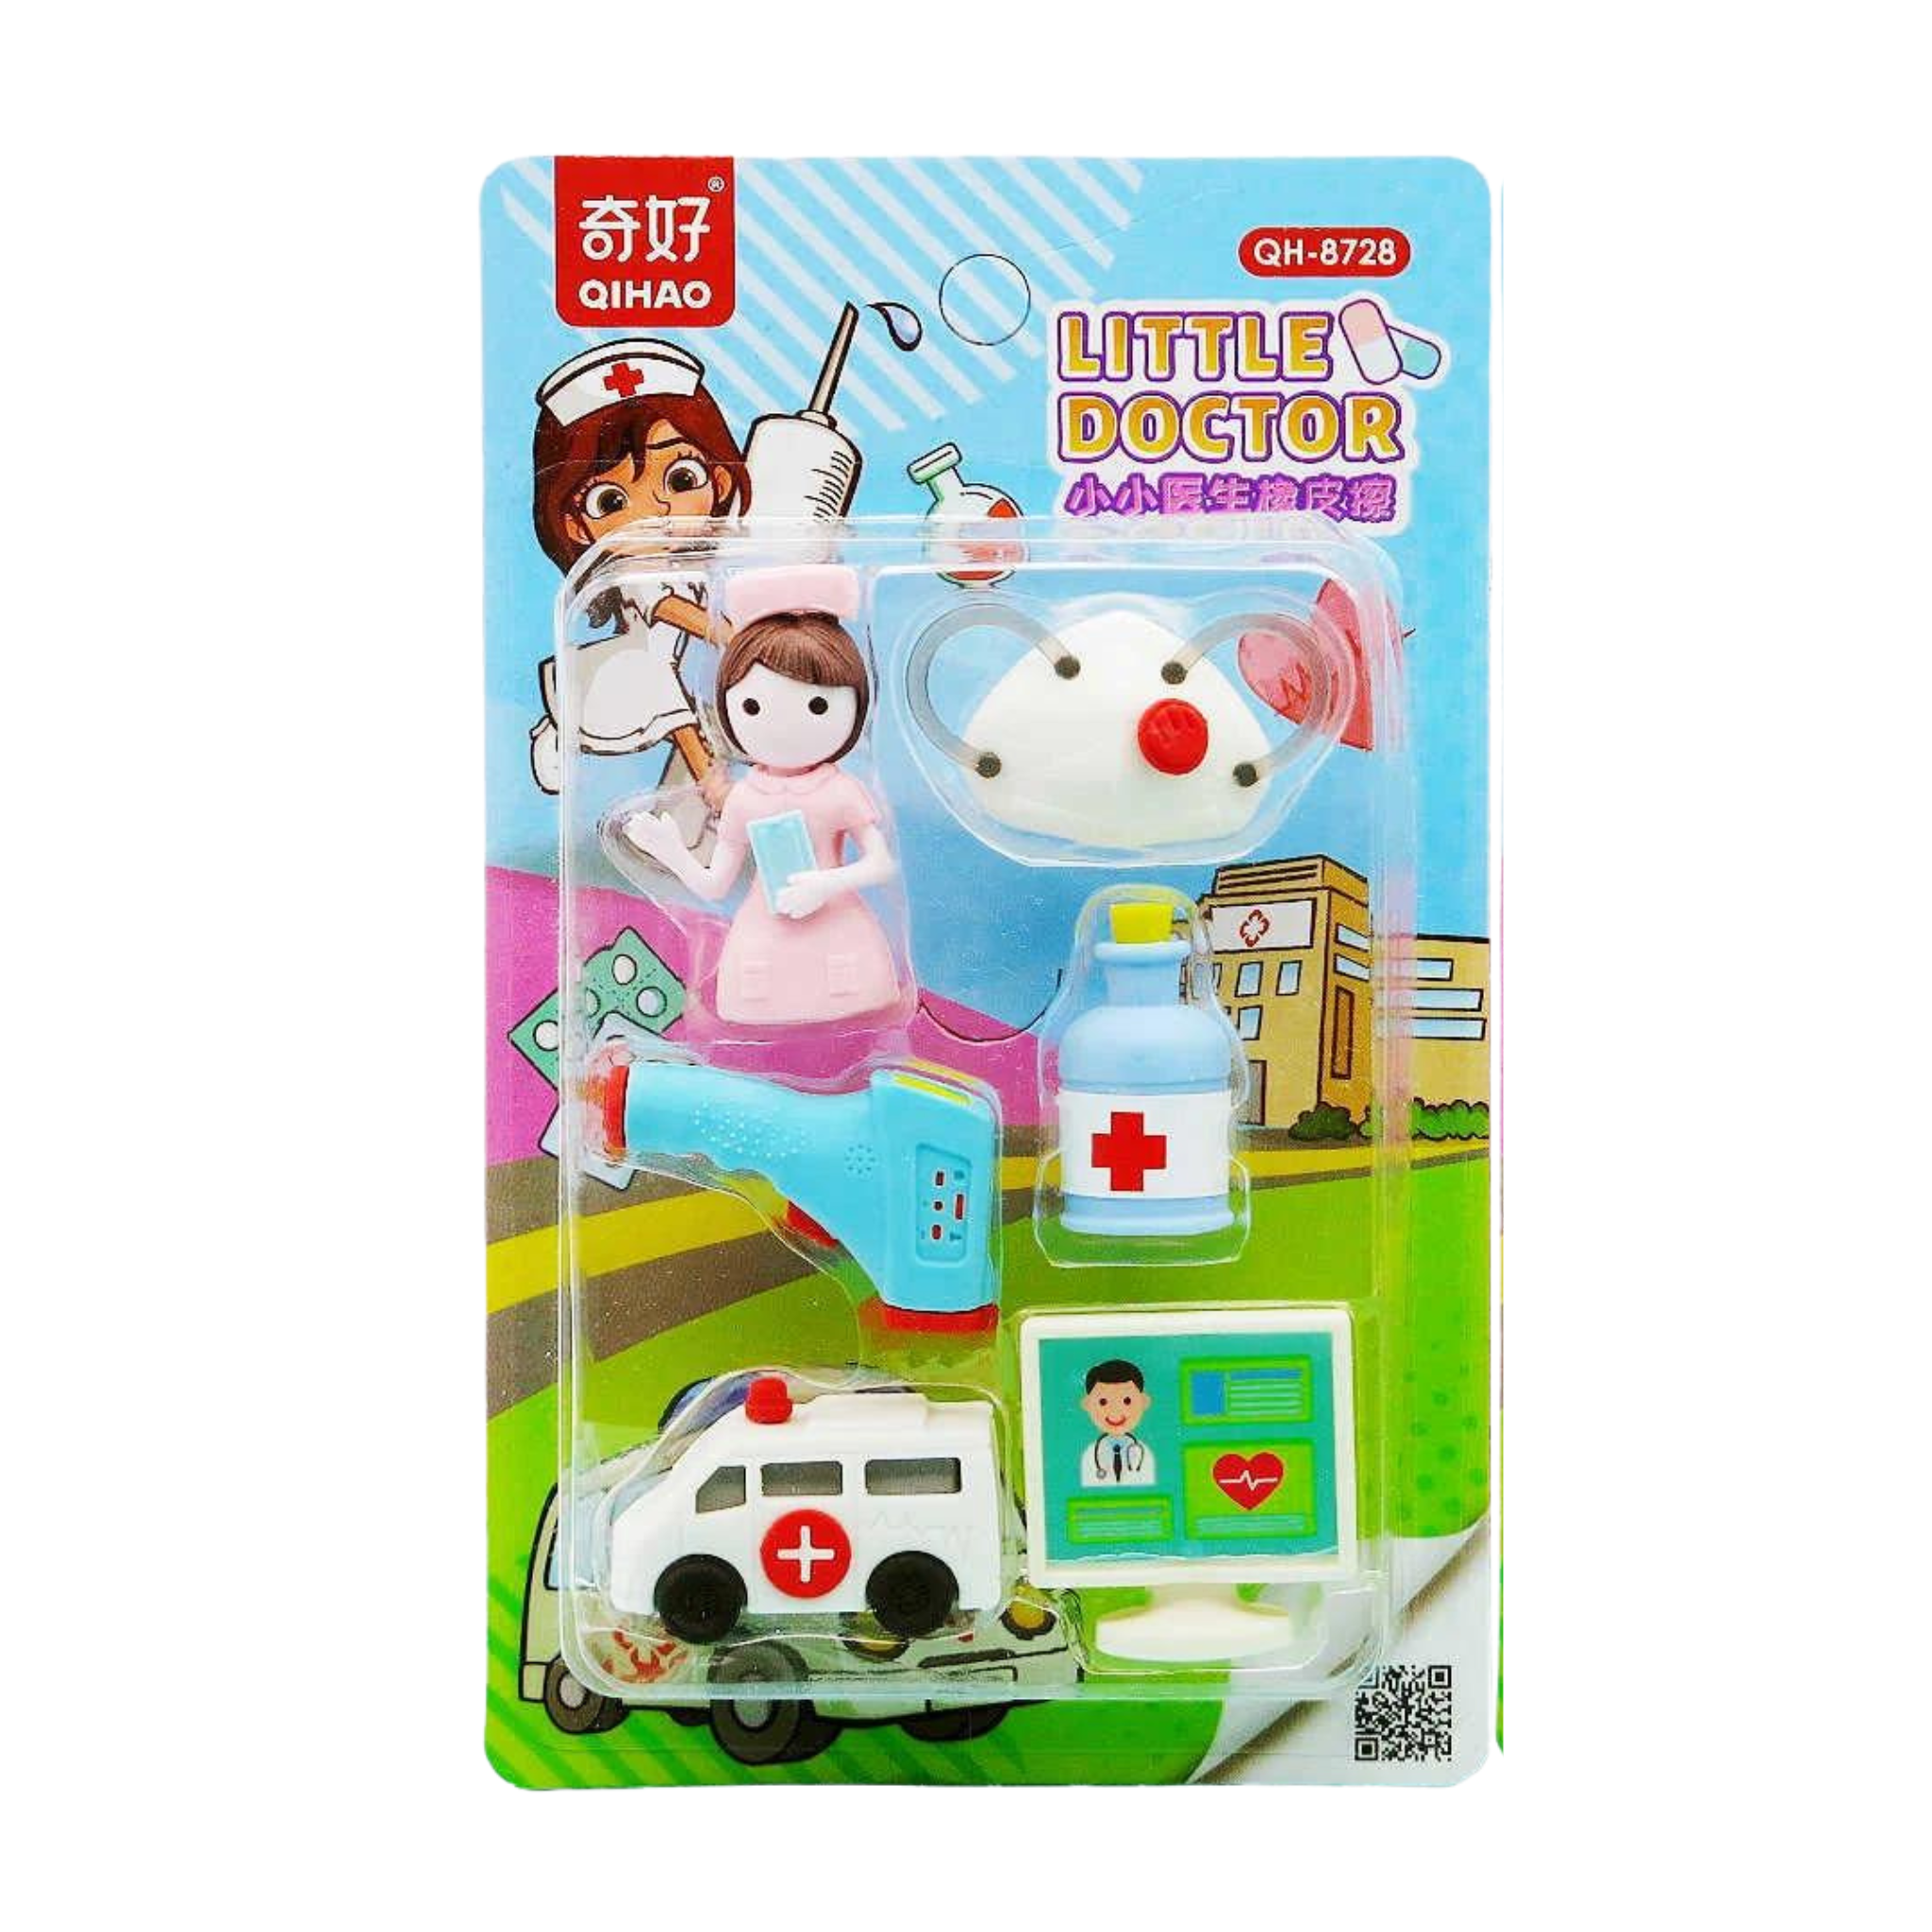 Qihao Little Doctor Eraser Set